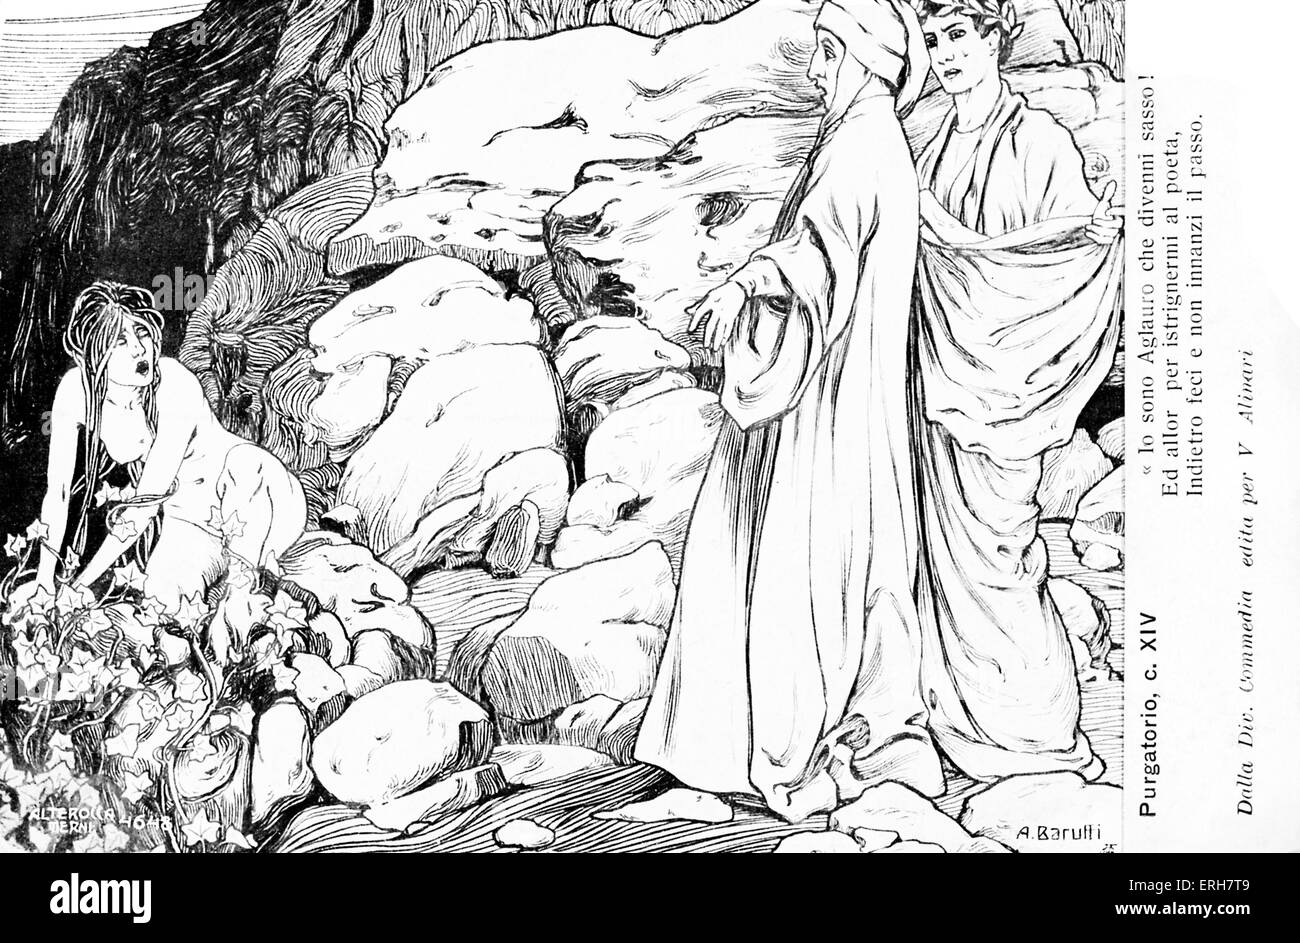 La Divine Comédie de Dante - illustration au purgatoire par A. Baruffi. 14e canto : ' Aglauro "Io sono che divenni sasso !'/ Ed allor, Banque D'Images